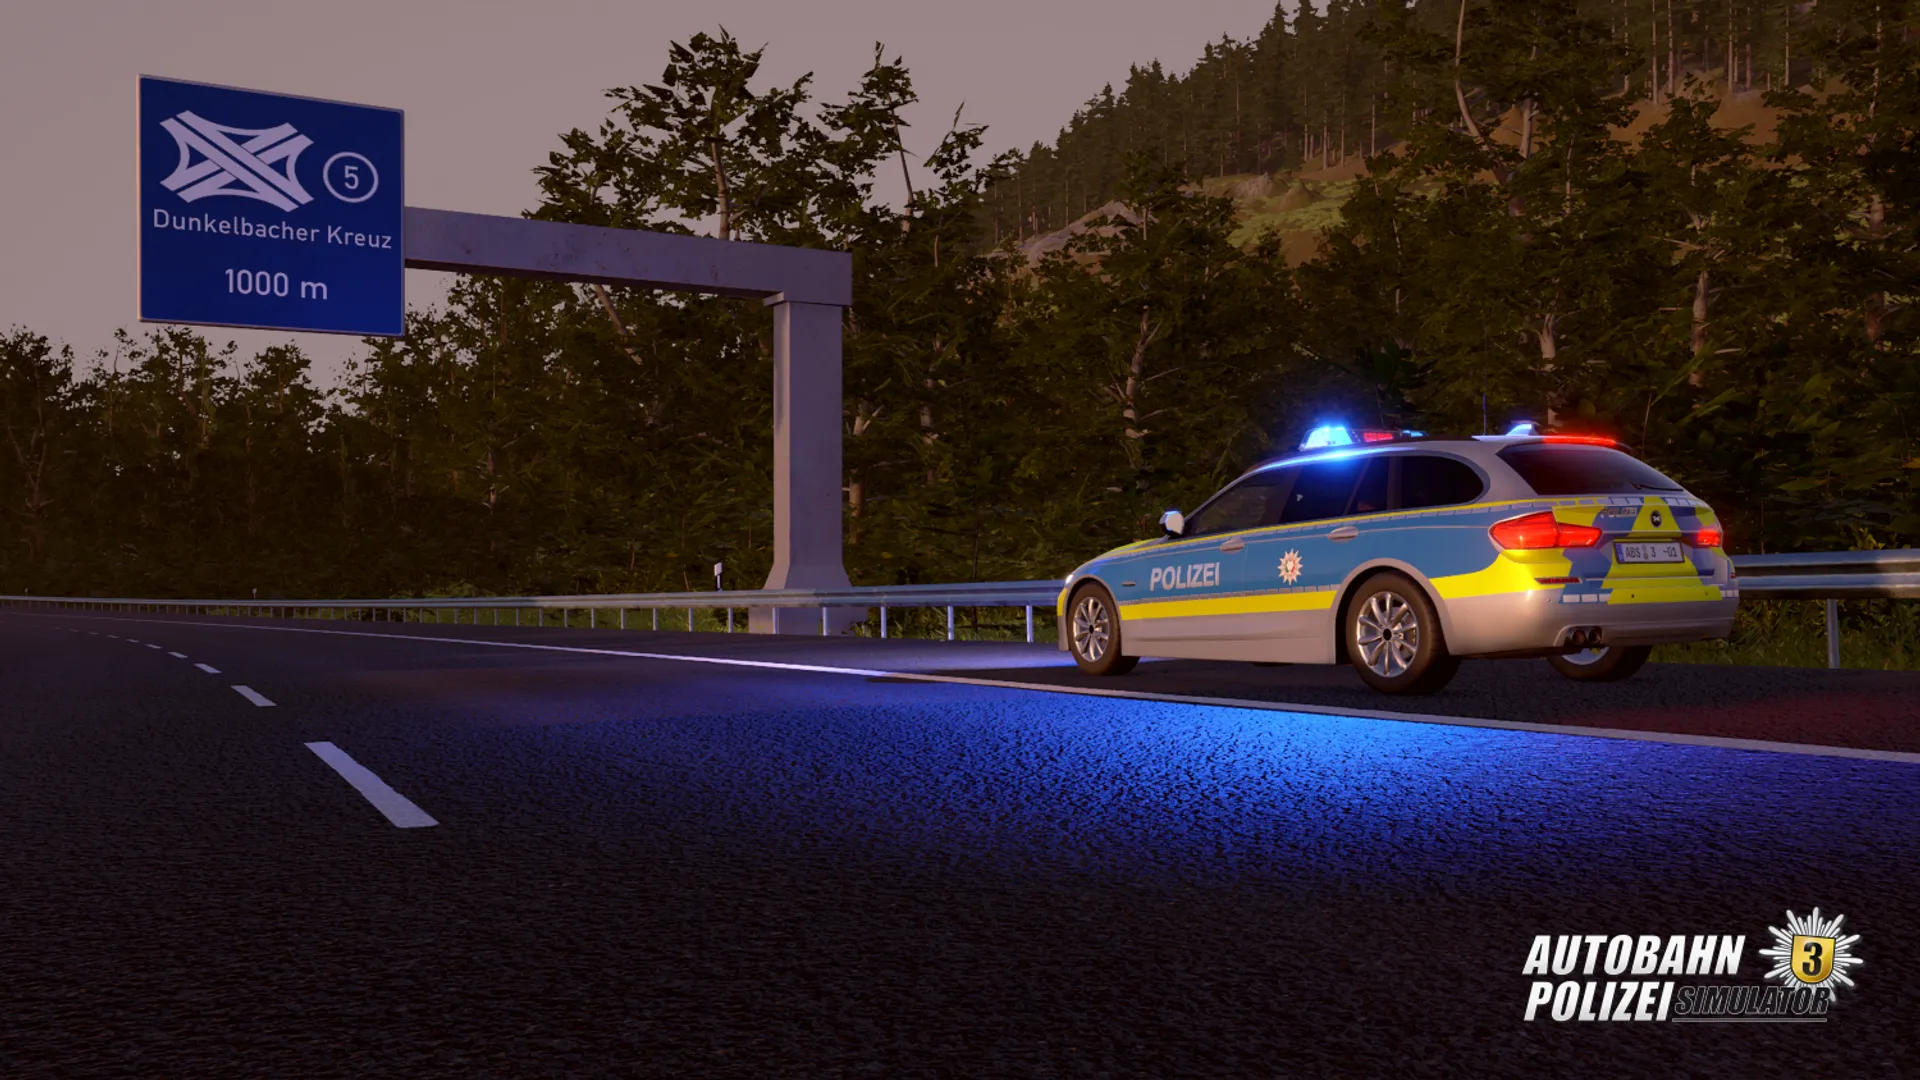 PS4 Autobahn police simulator 3 - 4